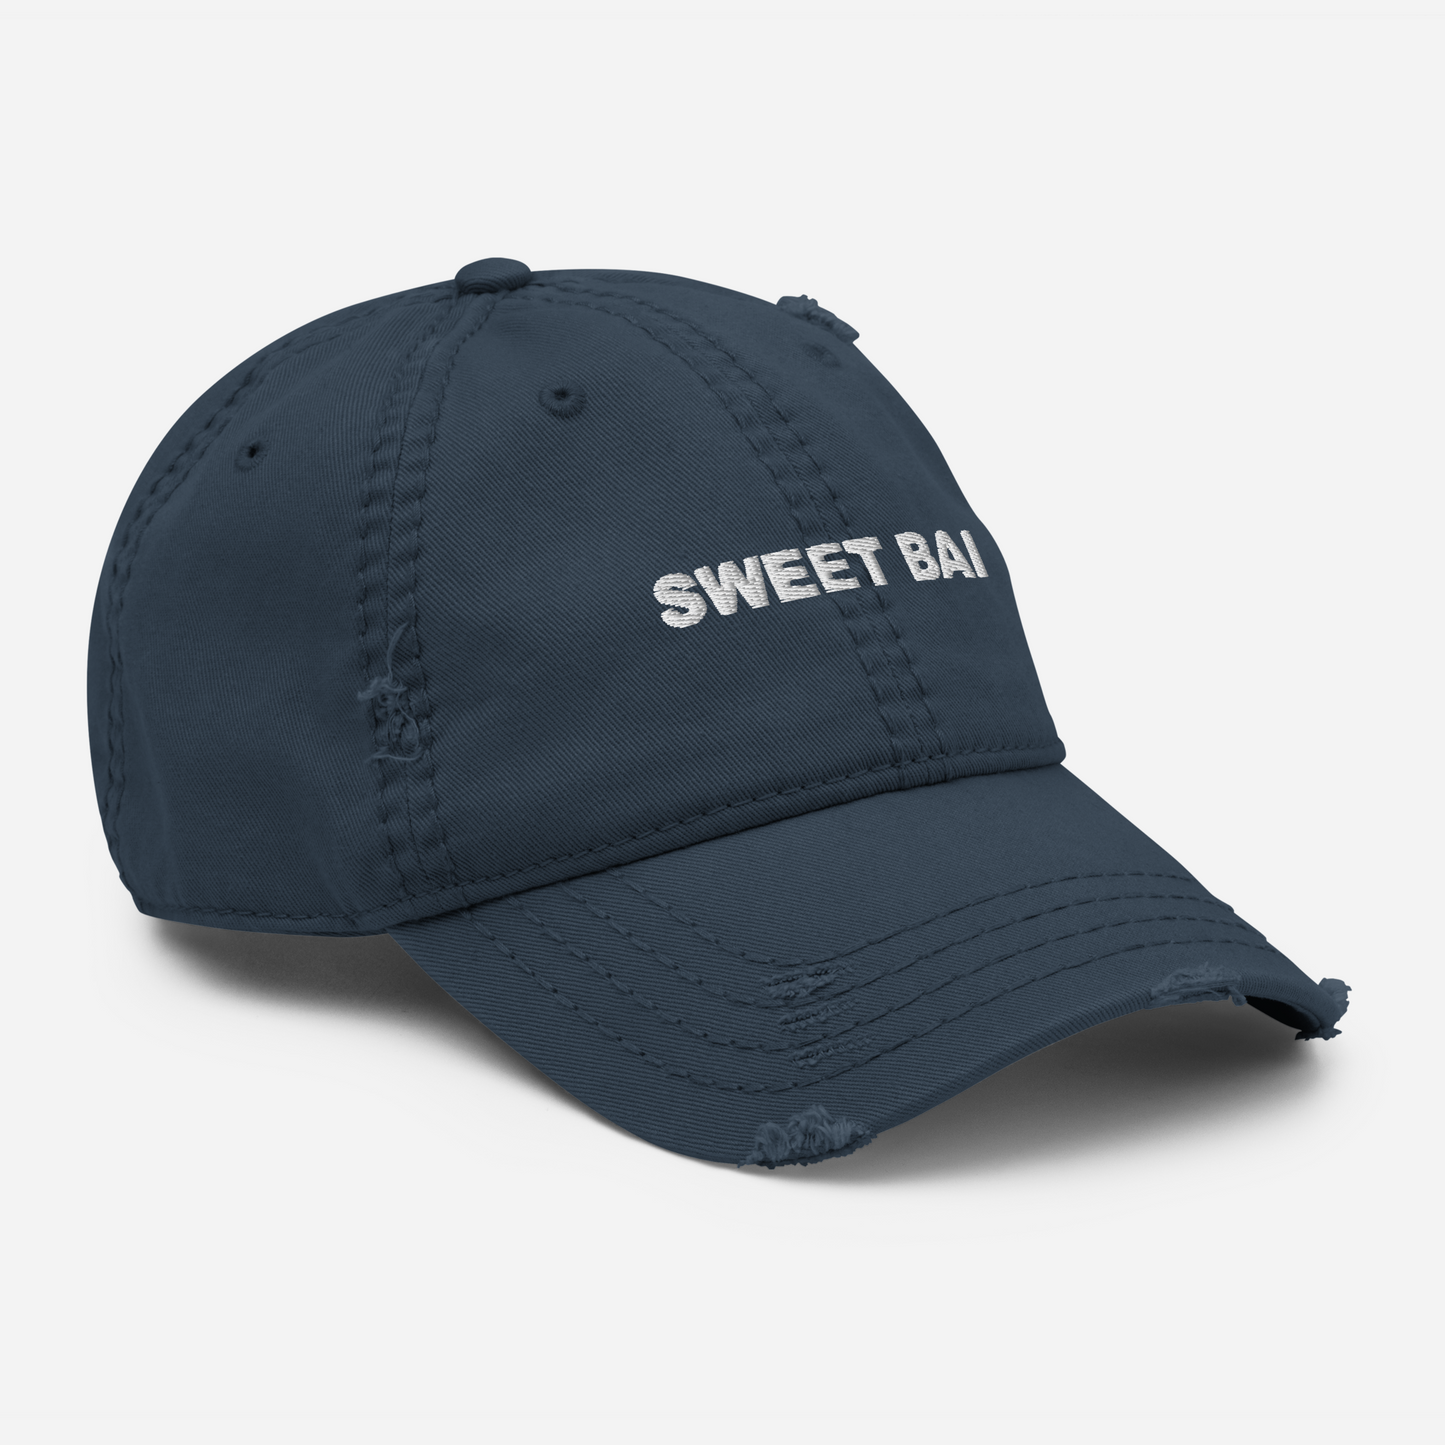 Sweet Bai Distressed Dad Hat